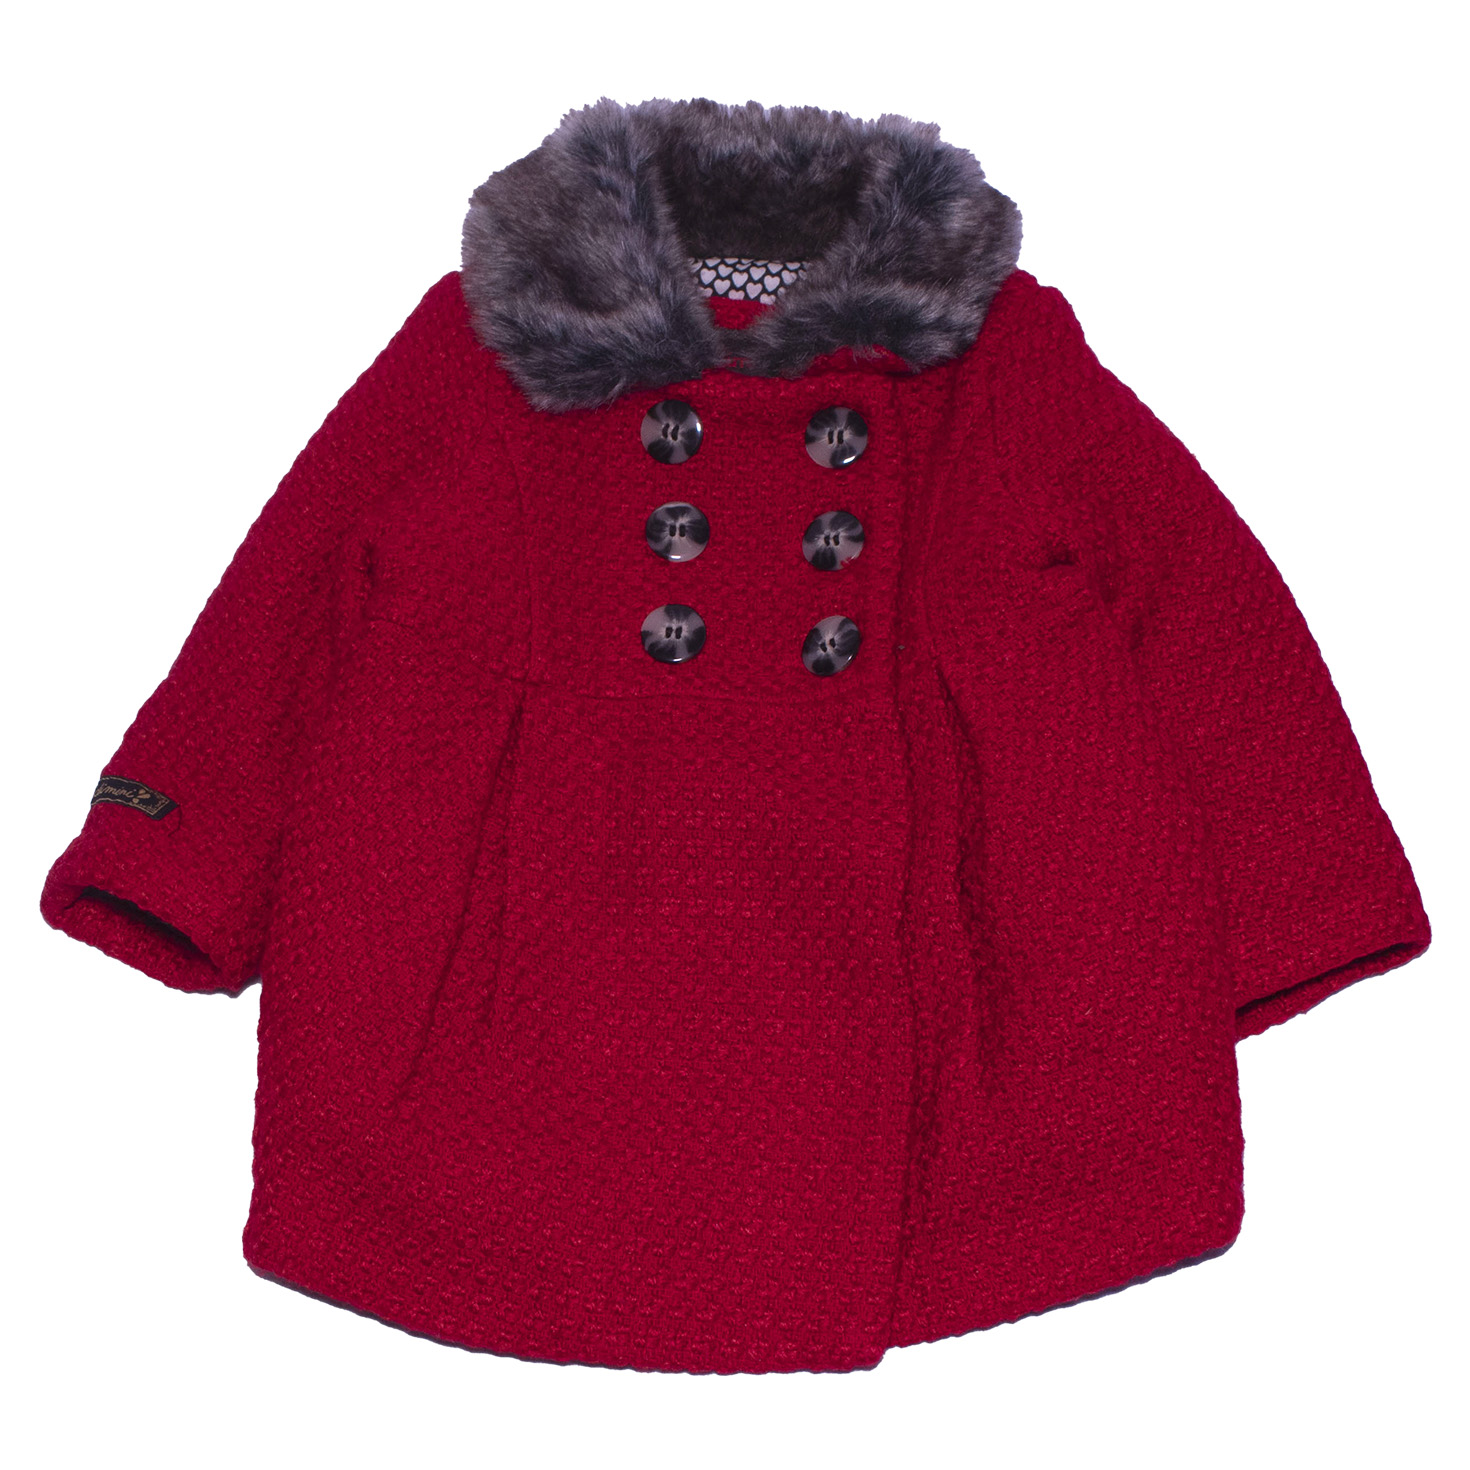 Manteau rouge laine fille CATIMINI - 12 mois